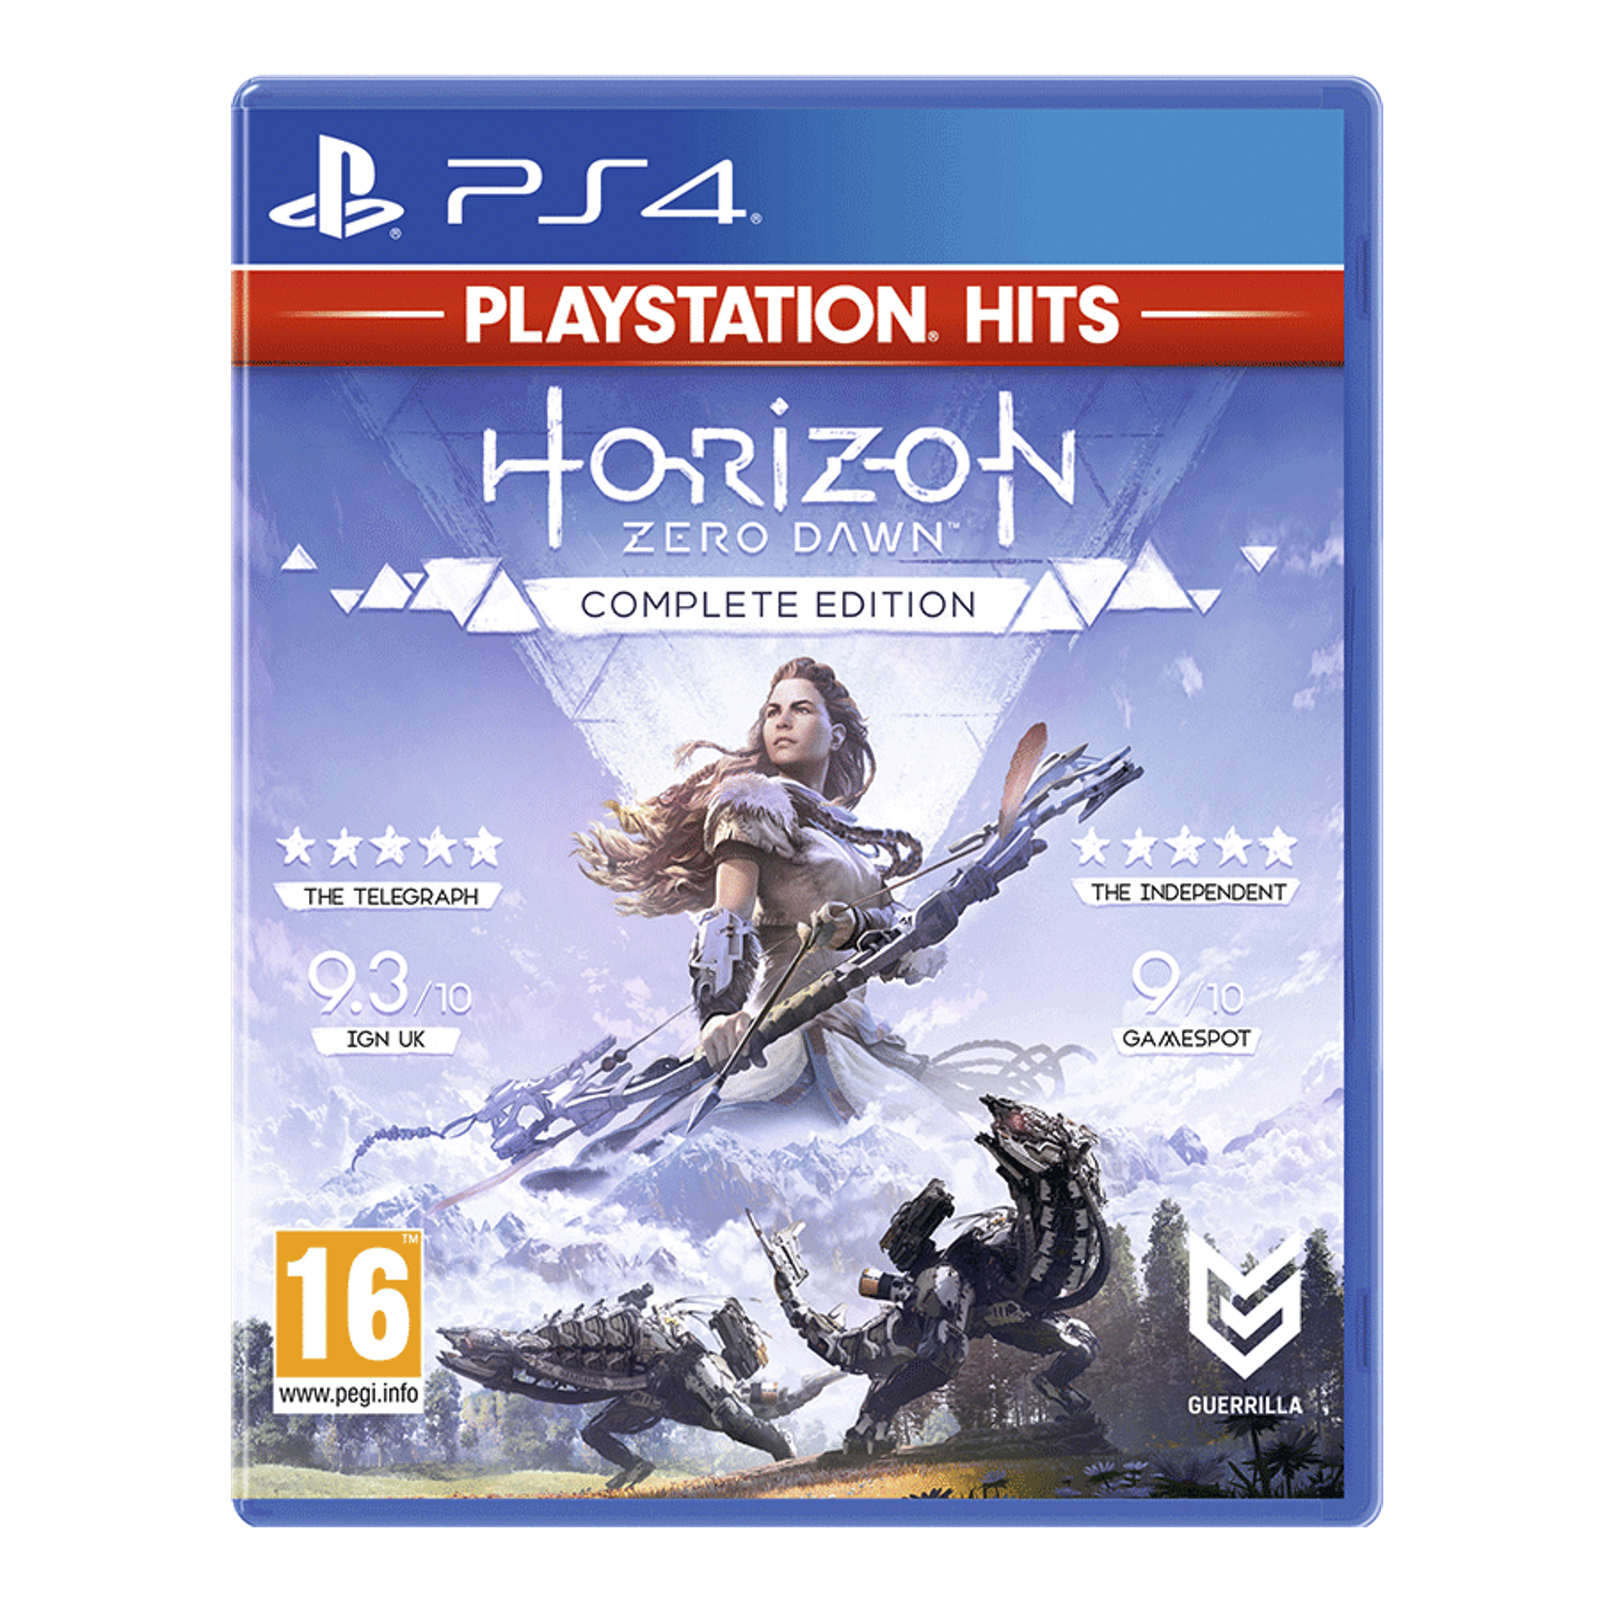 Playstation 4 horizon zero. Horizon Zero Dawn complete Edition ps4. Horizon Zero Dawn ps4 диск. Horizon Zero Dawn диск пс4. Sony PLAYSTATION 4 Horizon Zero.